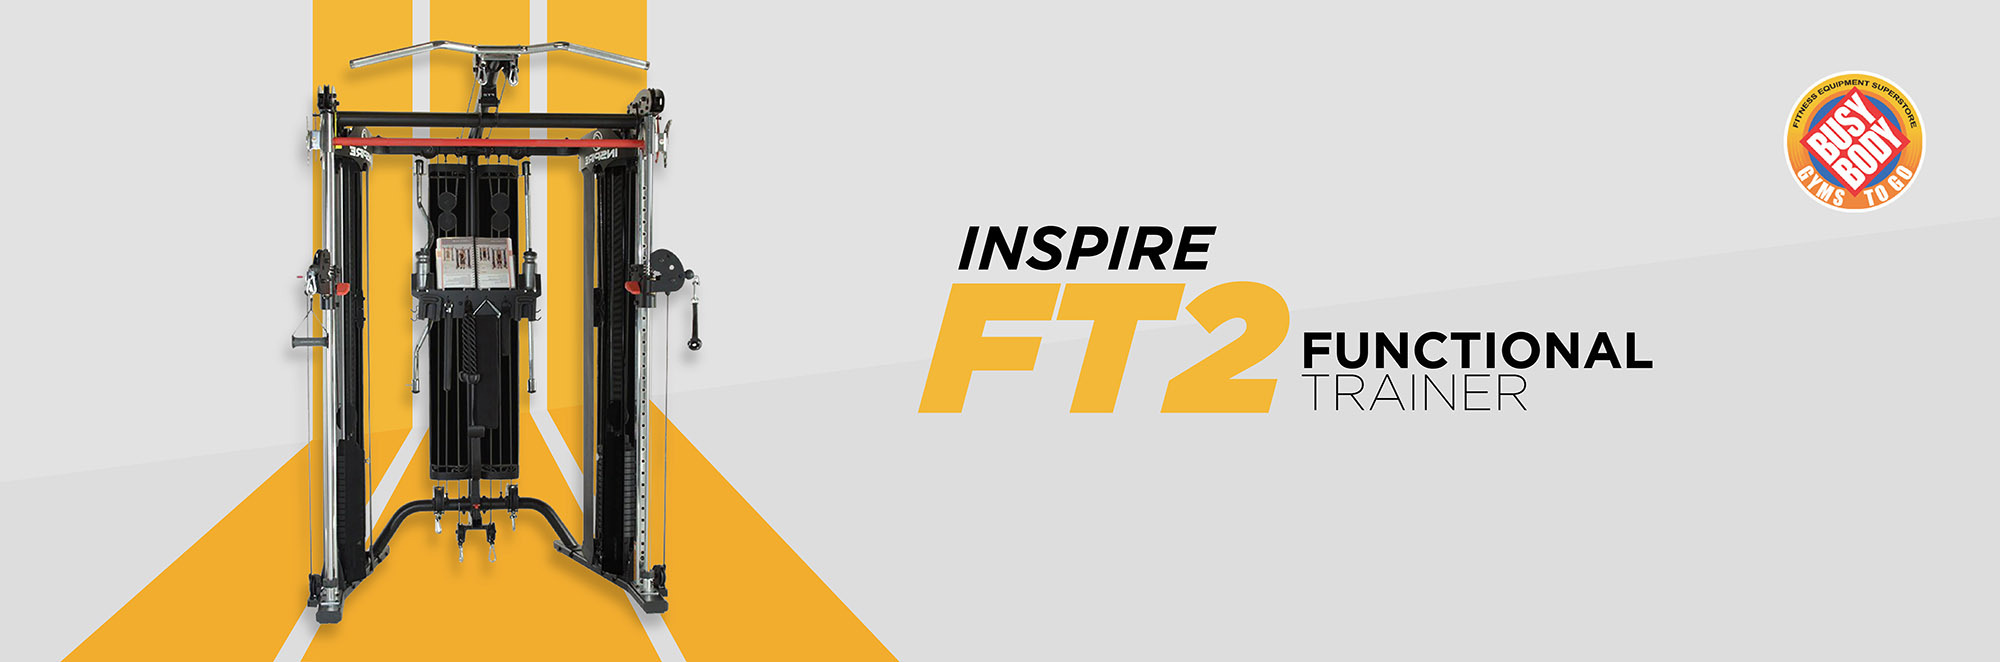 Inspire FT2 Functional Trainer